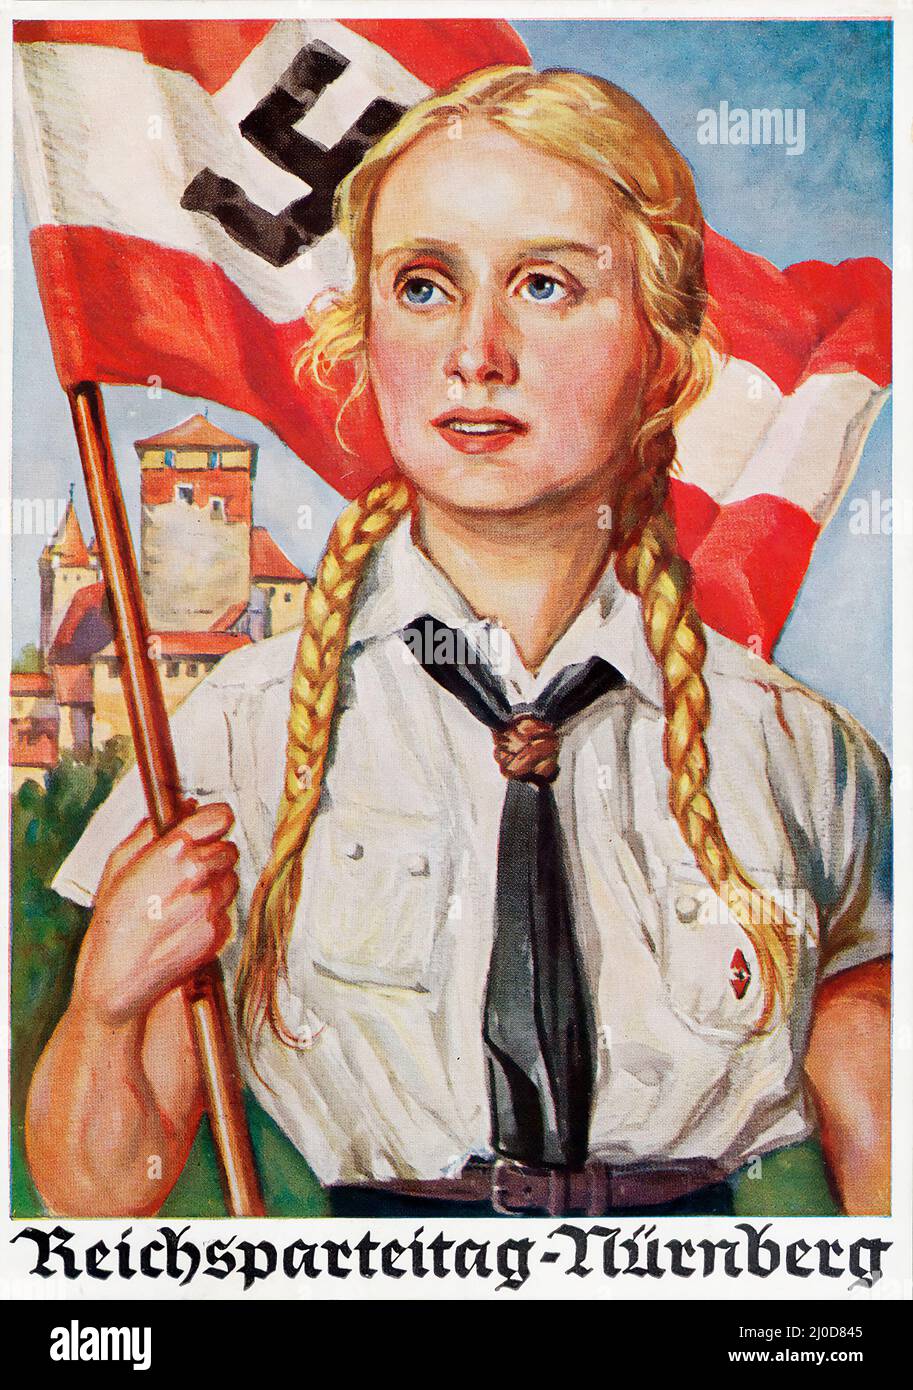 German Nazi propaganda - Reichsparteitag Nürnberg Postkarte Ansichtskarte, blonde Nazi girl - postcard 1936 - Artwork by Richard Borrmeister. Stock Photo